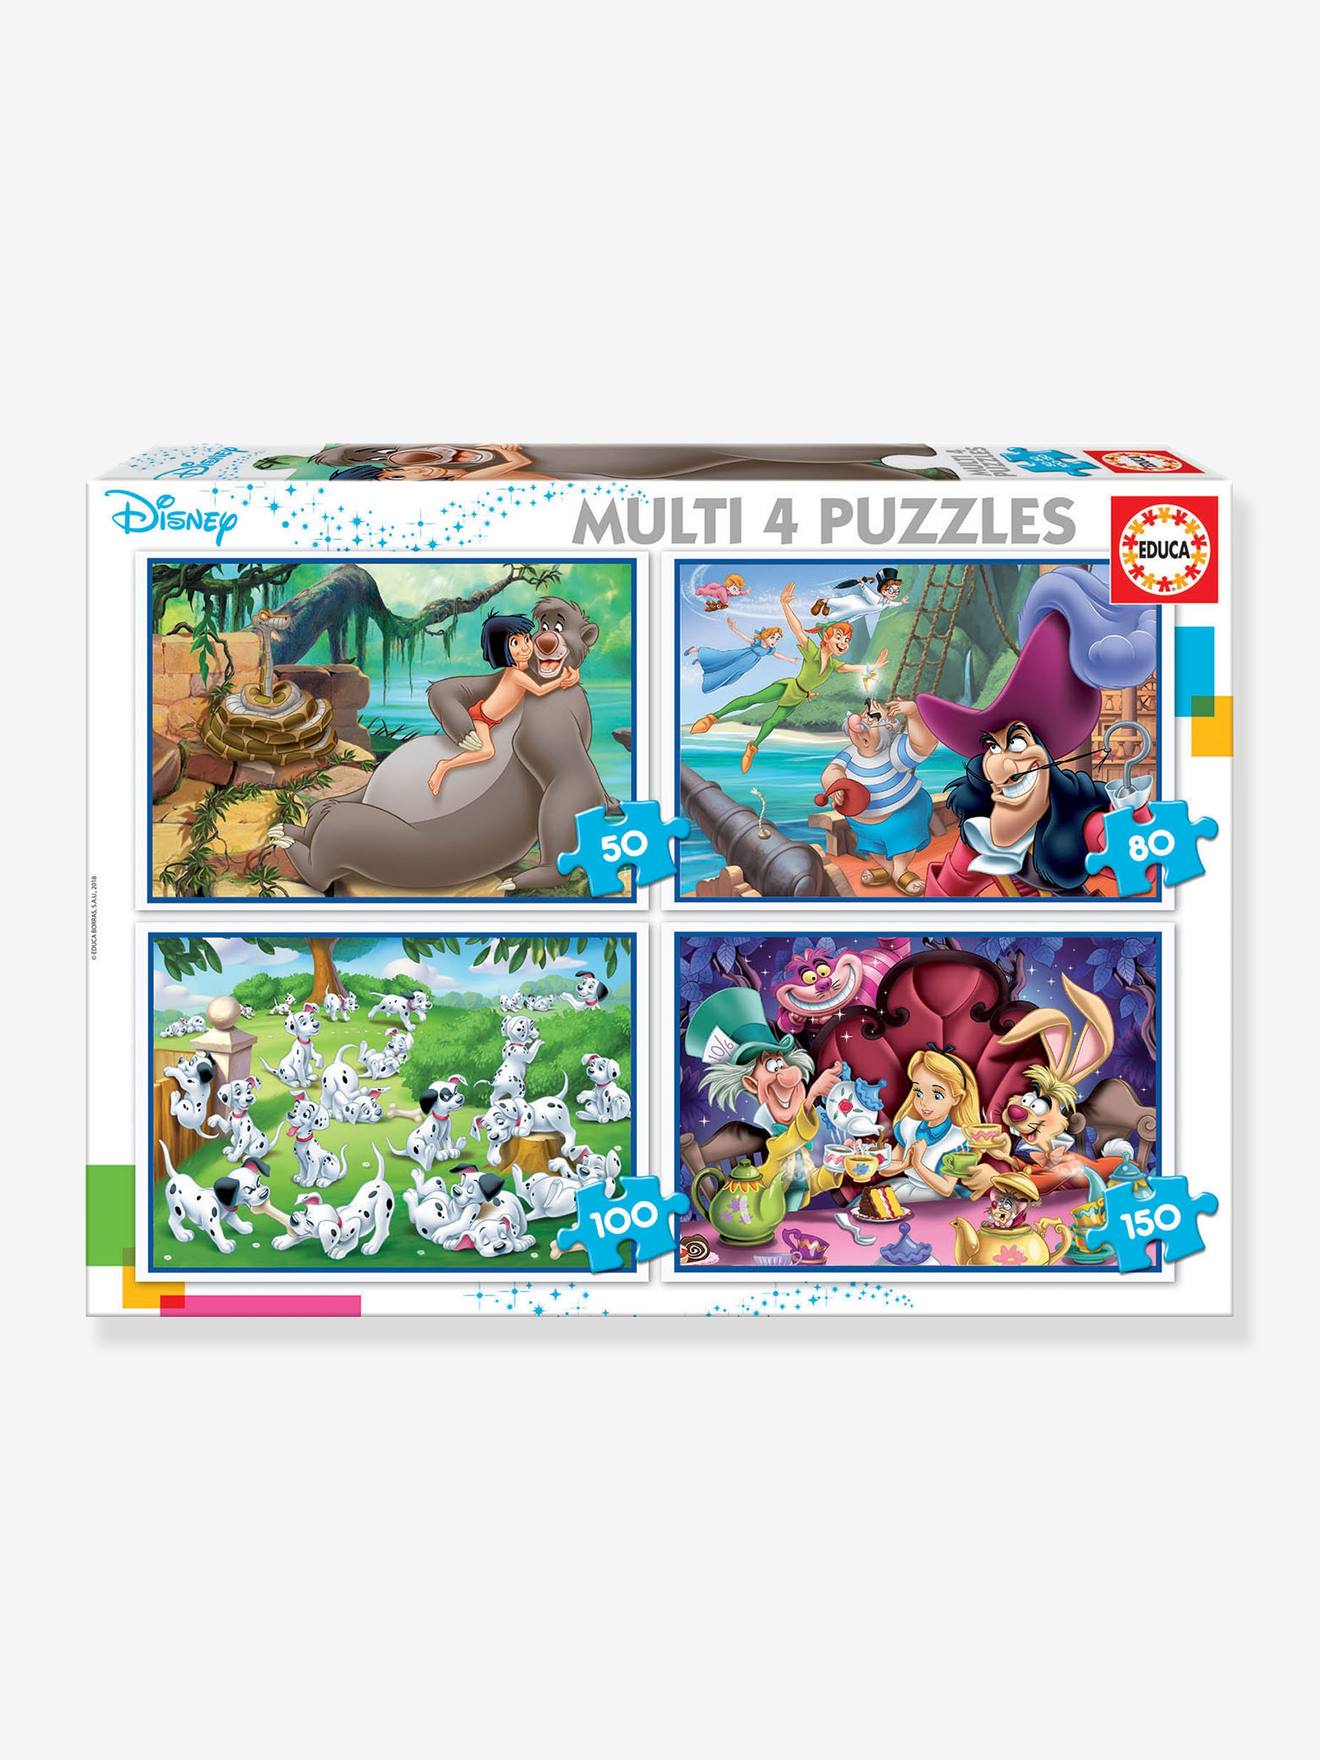 Progressive Puzzles, 50-150 Pieces, Multi 4 Disney(r) Classics, by EDUCA white